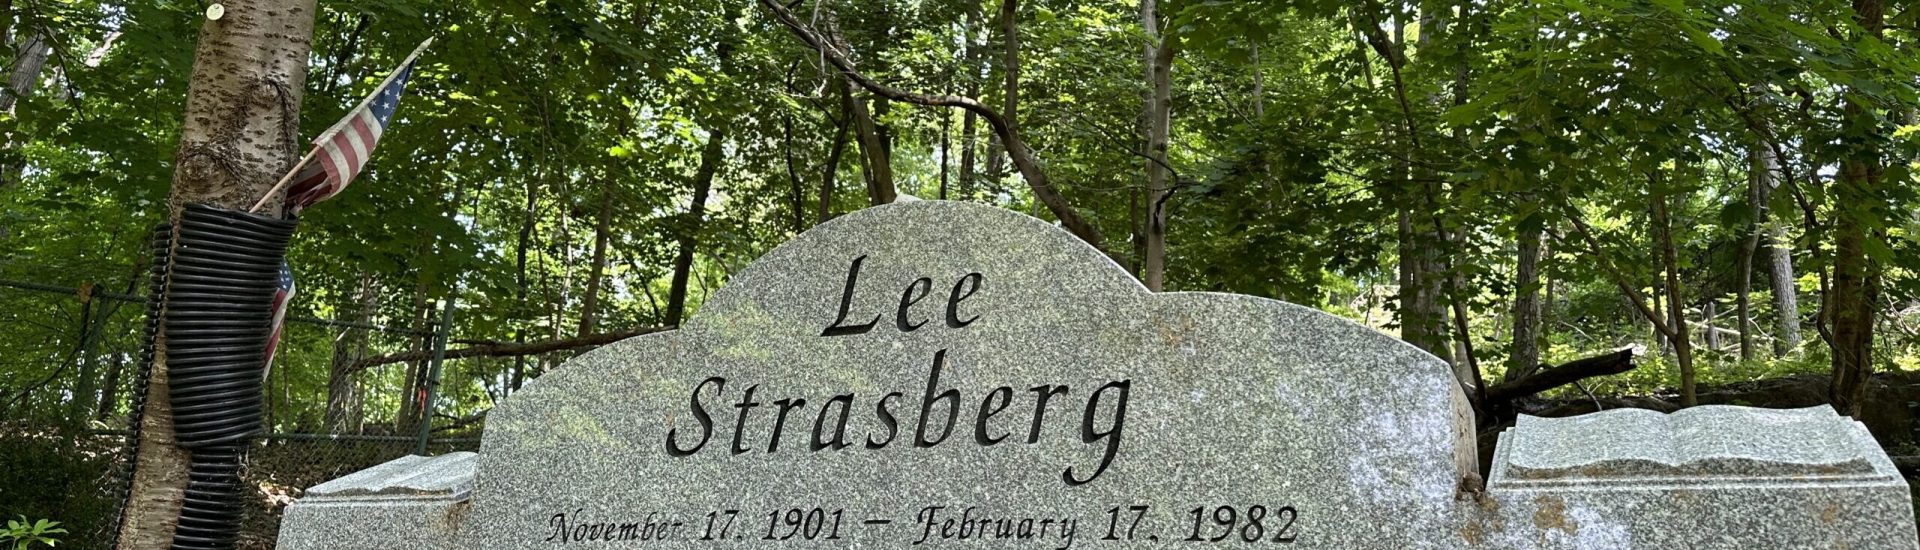 Lee Strasberg